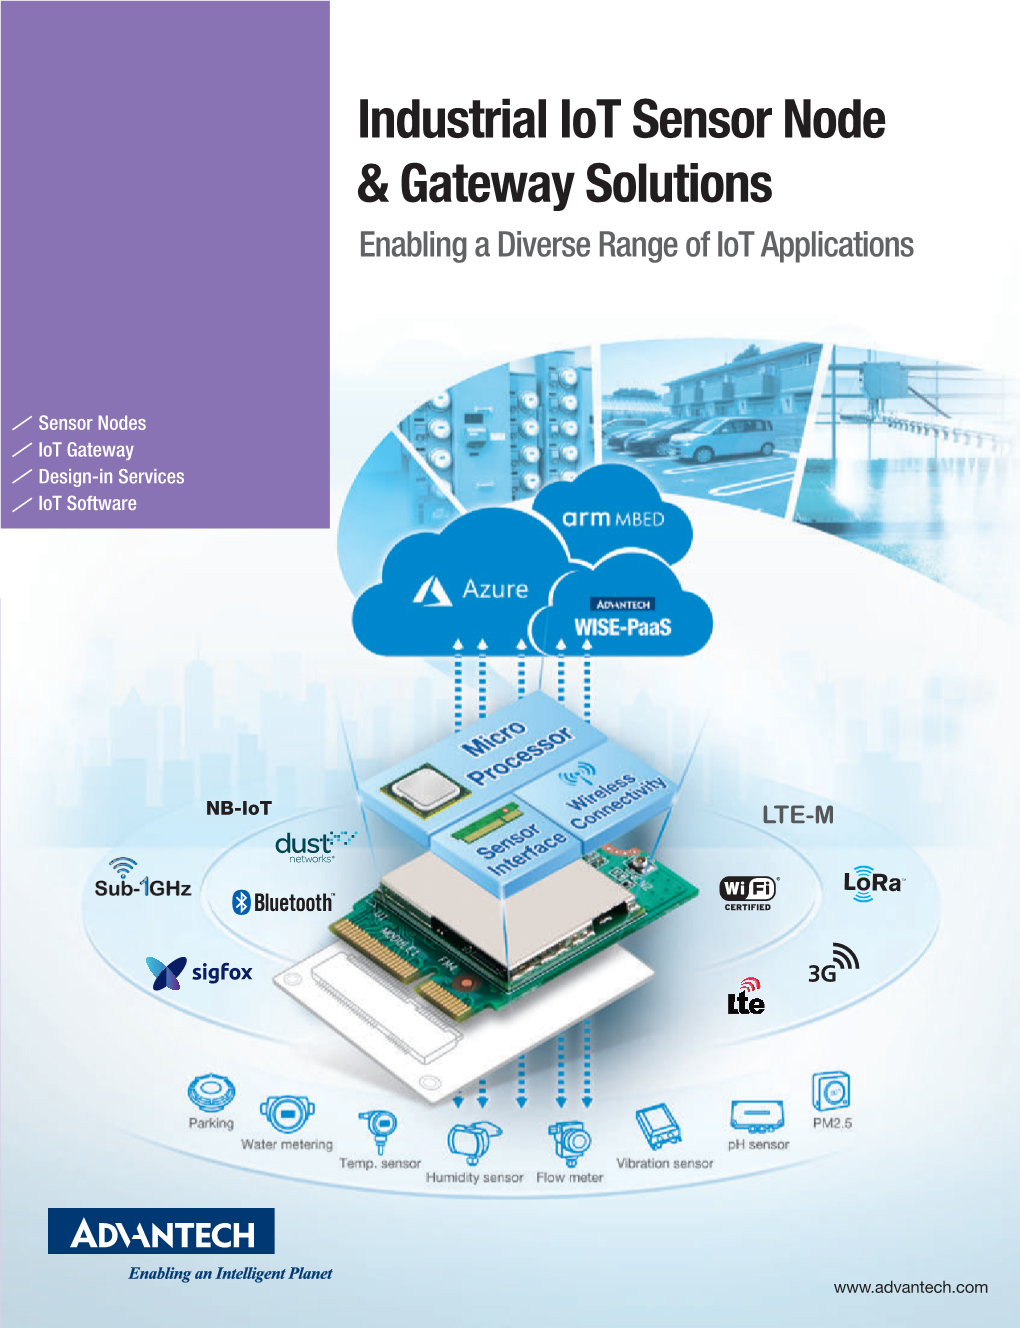 Industrial Iot Sensor Node & Gateway Solutions